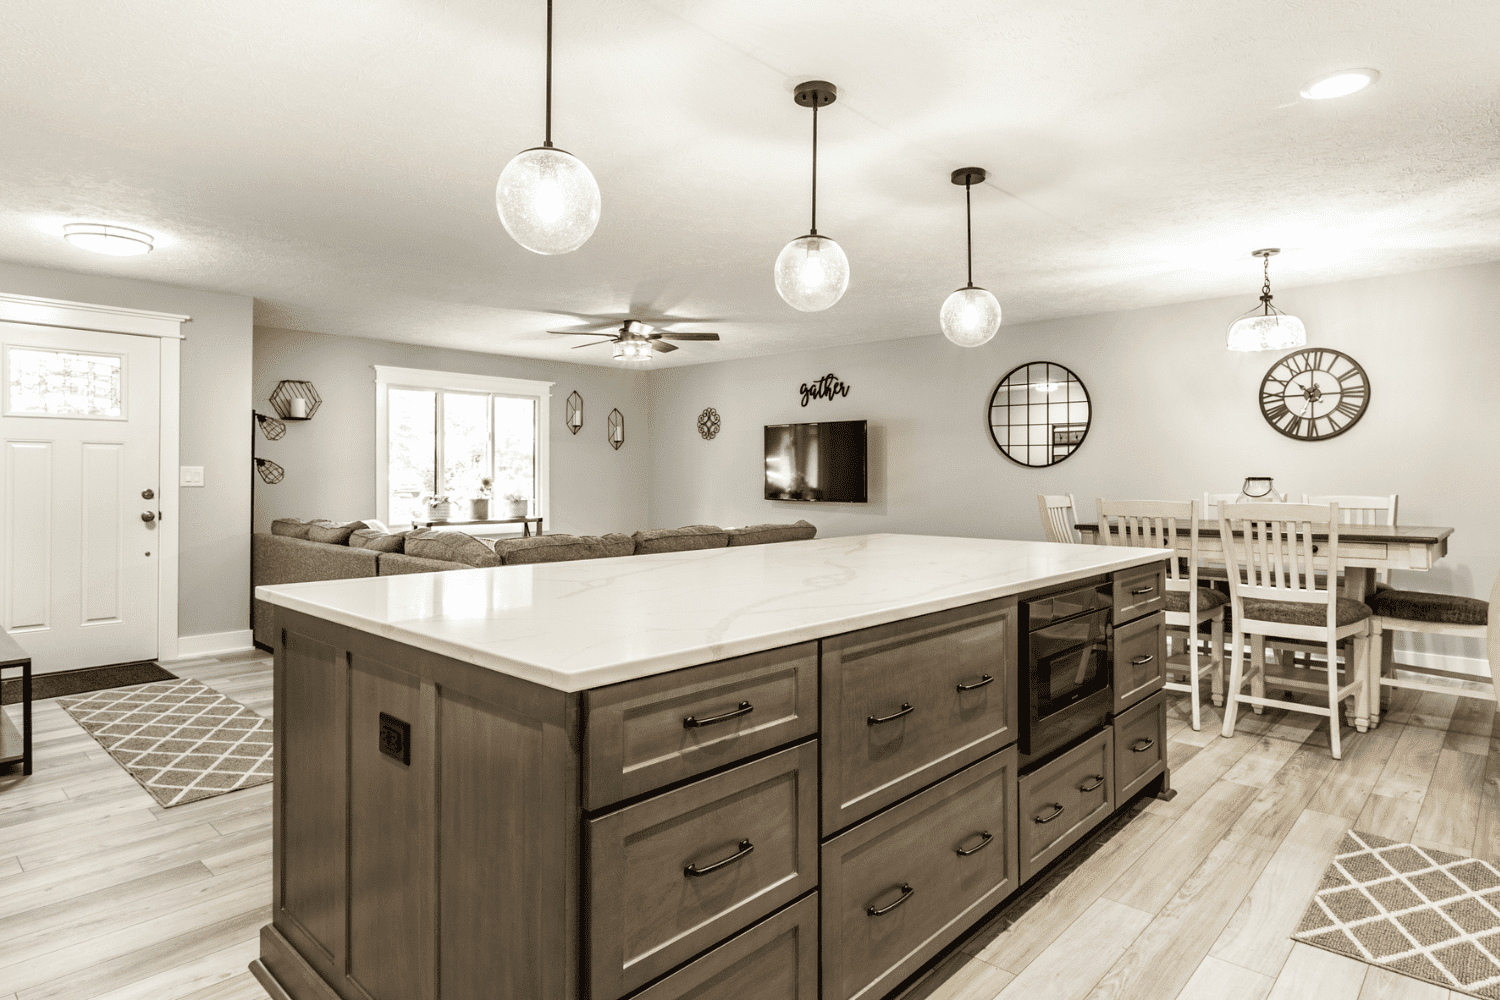 Nicholas Design Build | A neutral kitchen captured in a black and white photo.